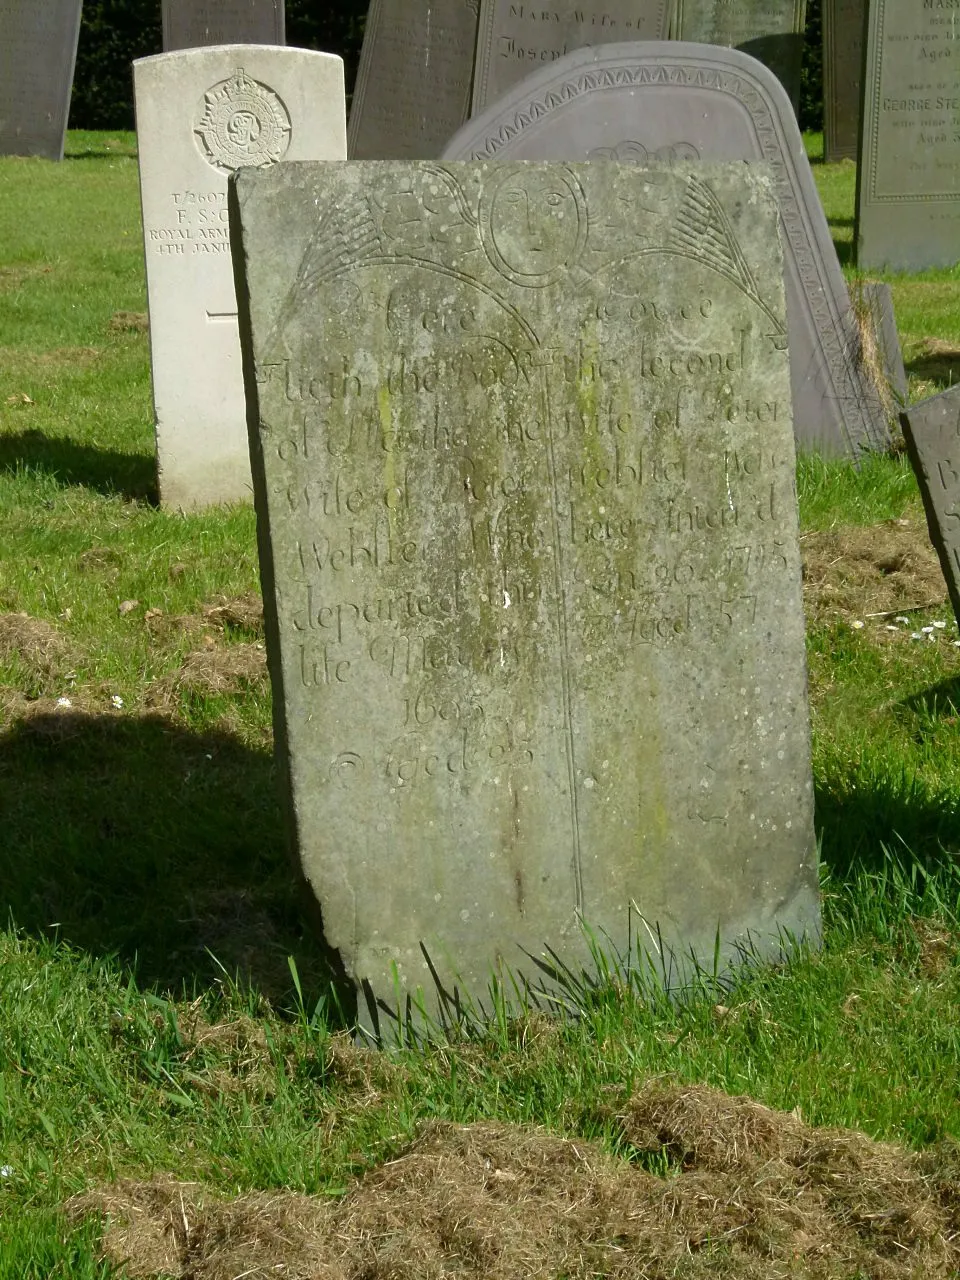 Photo showing: Belvoir Angel headstone, Ratcliffe on the Wreake churchyard